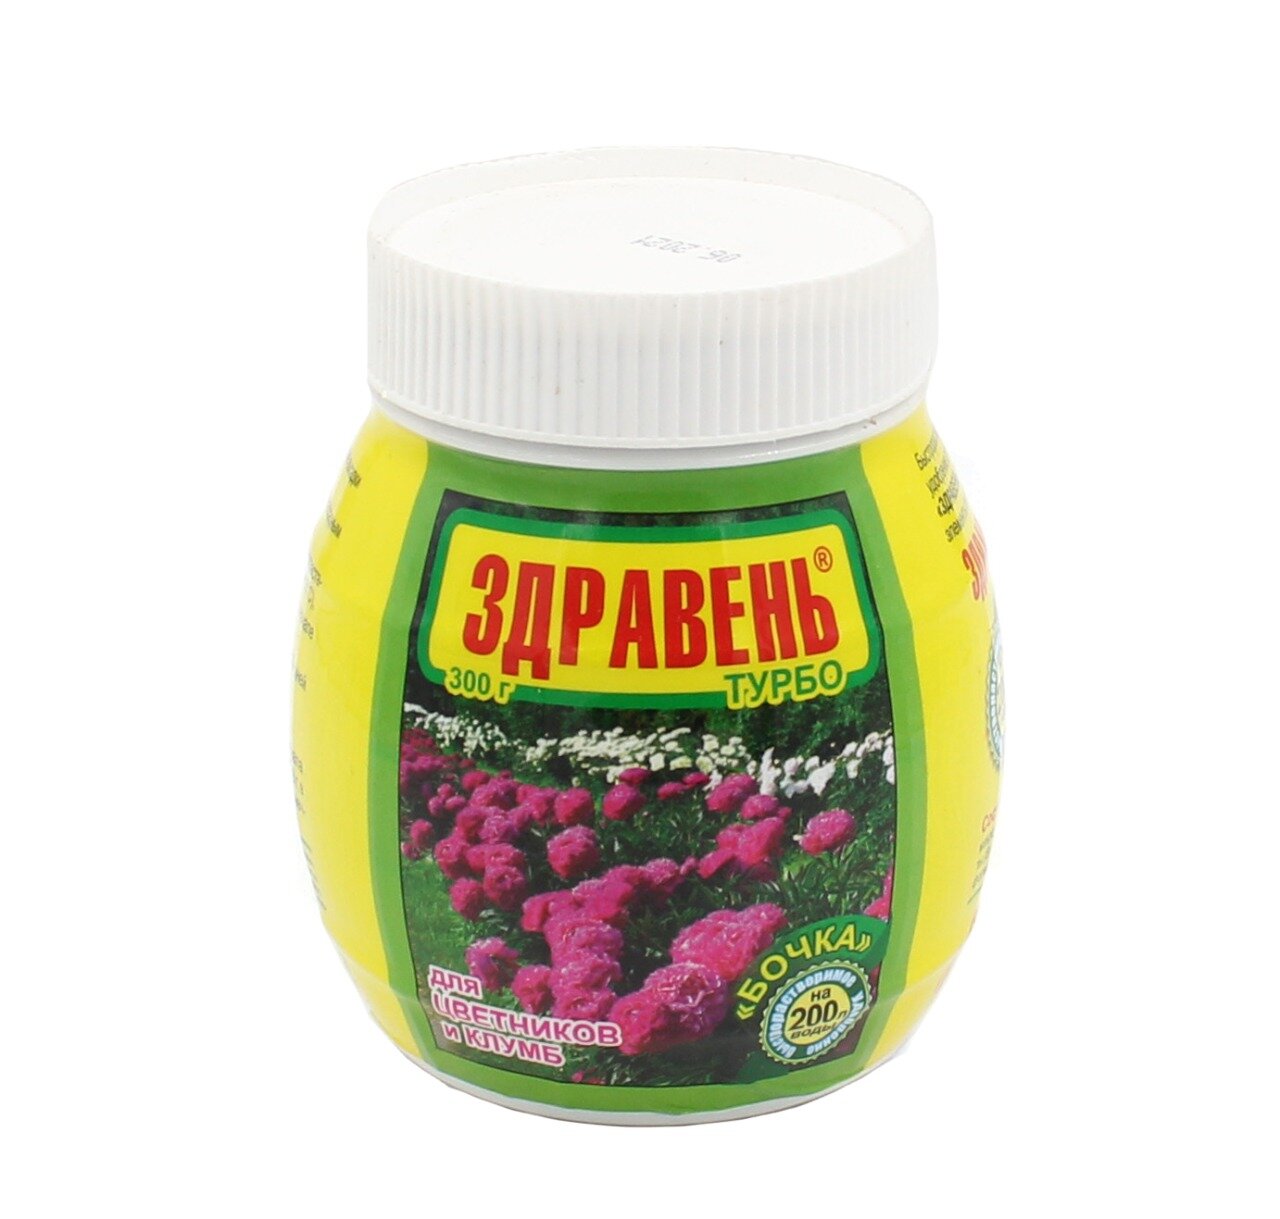 Здравень Турбо цветники И клумбы (300 гр)